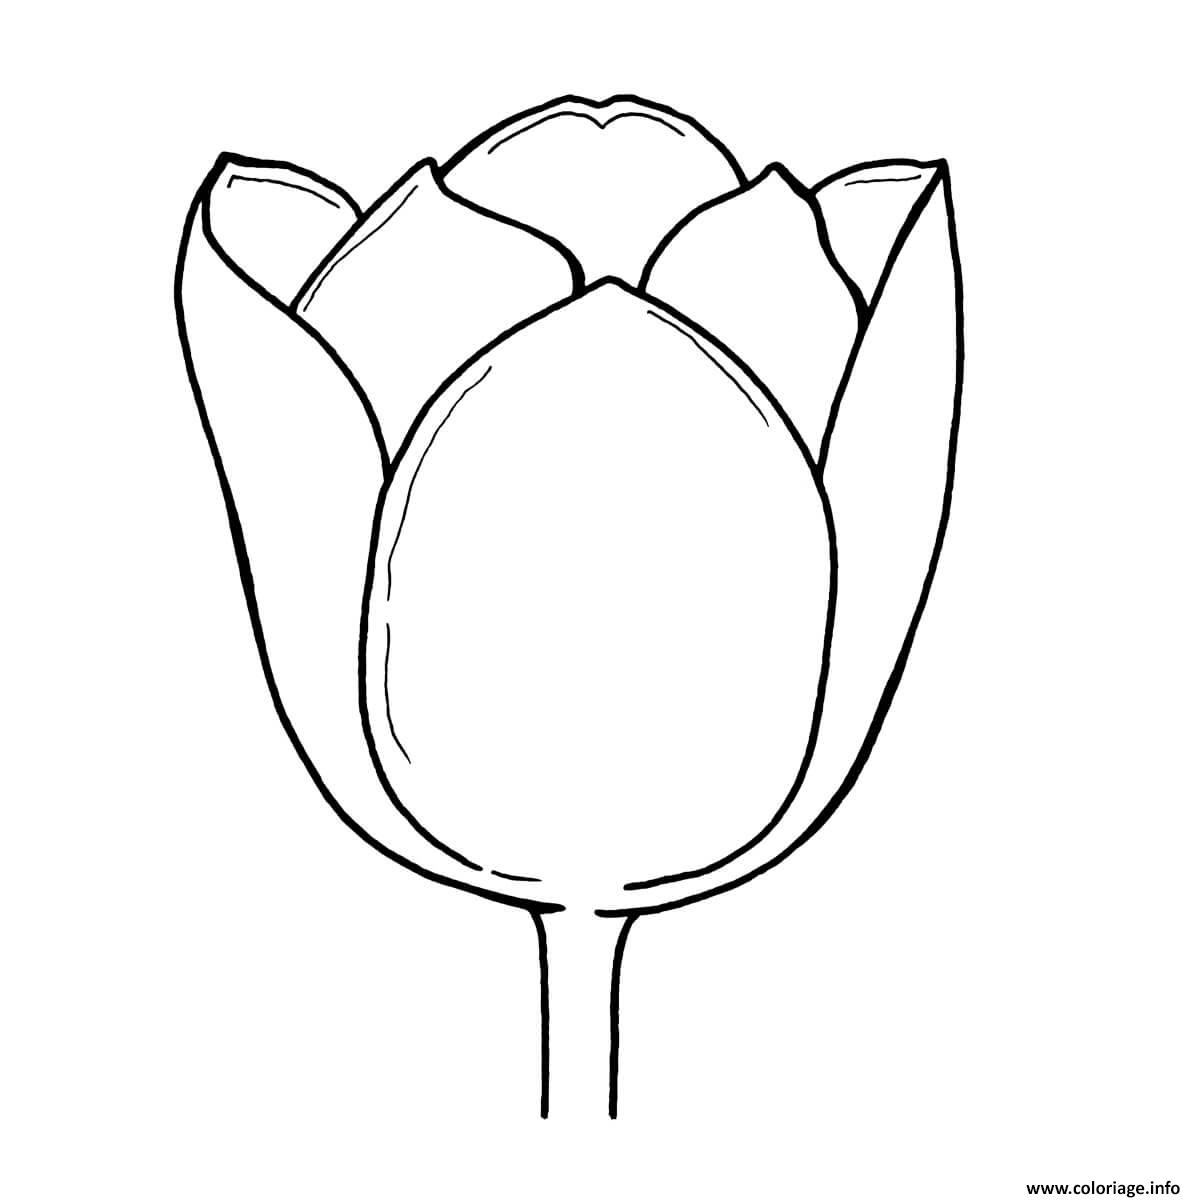 Dessin nature tulipe perroquet Coloriage Gratuit à Imprimer